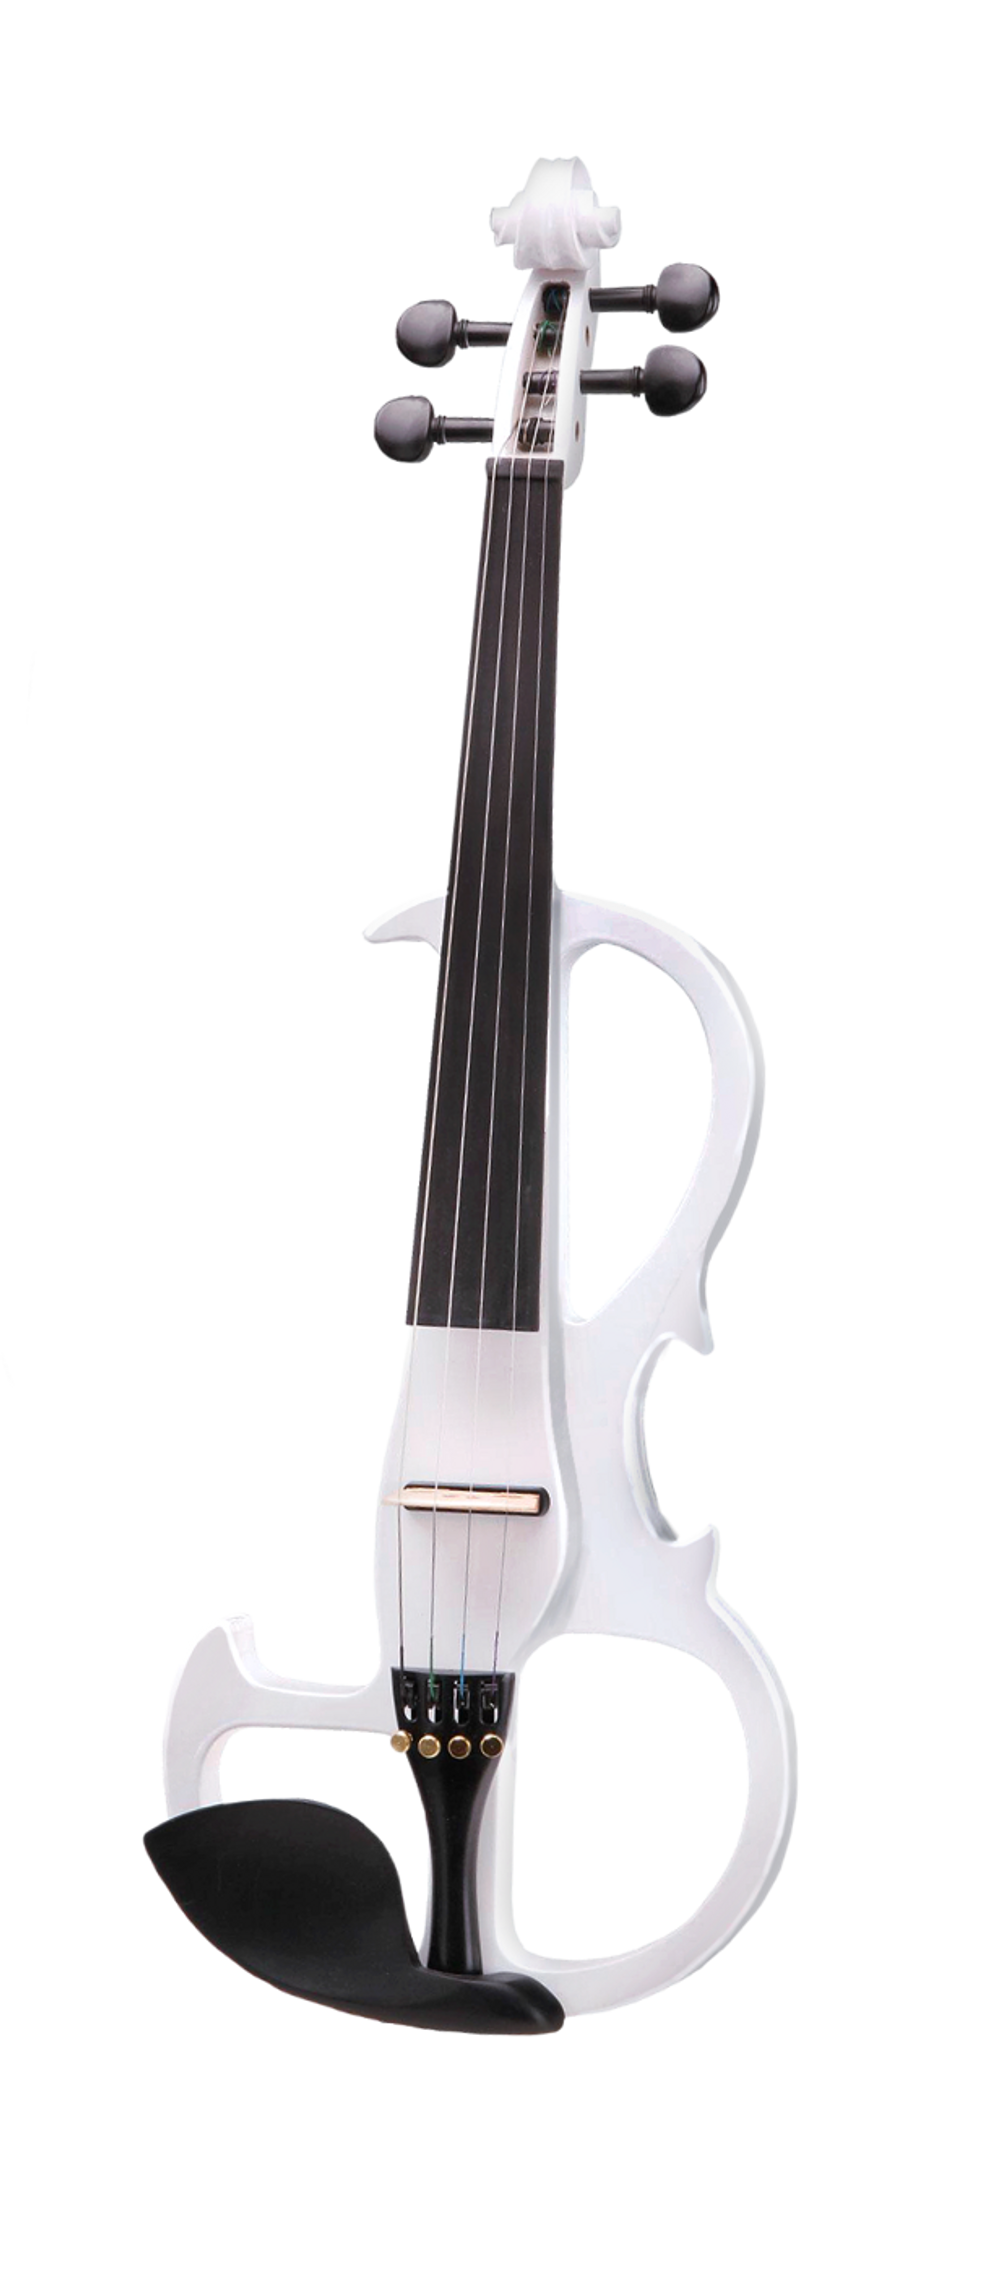 Katjas electric violin